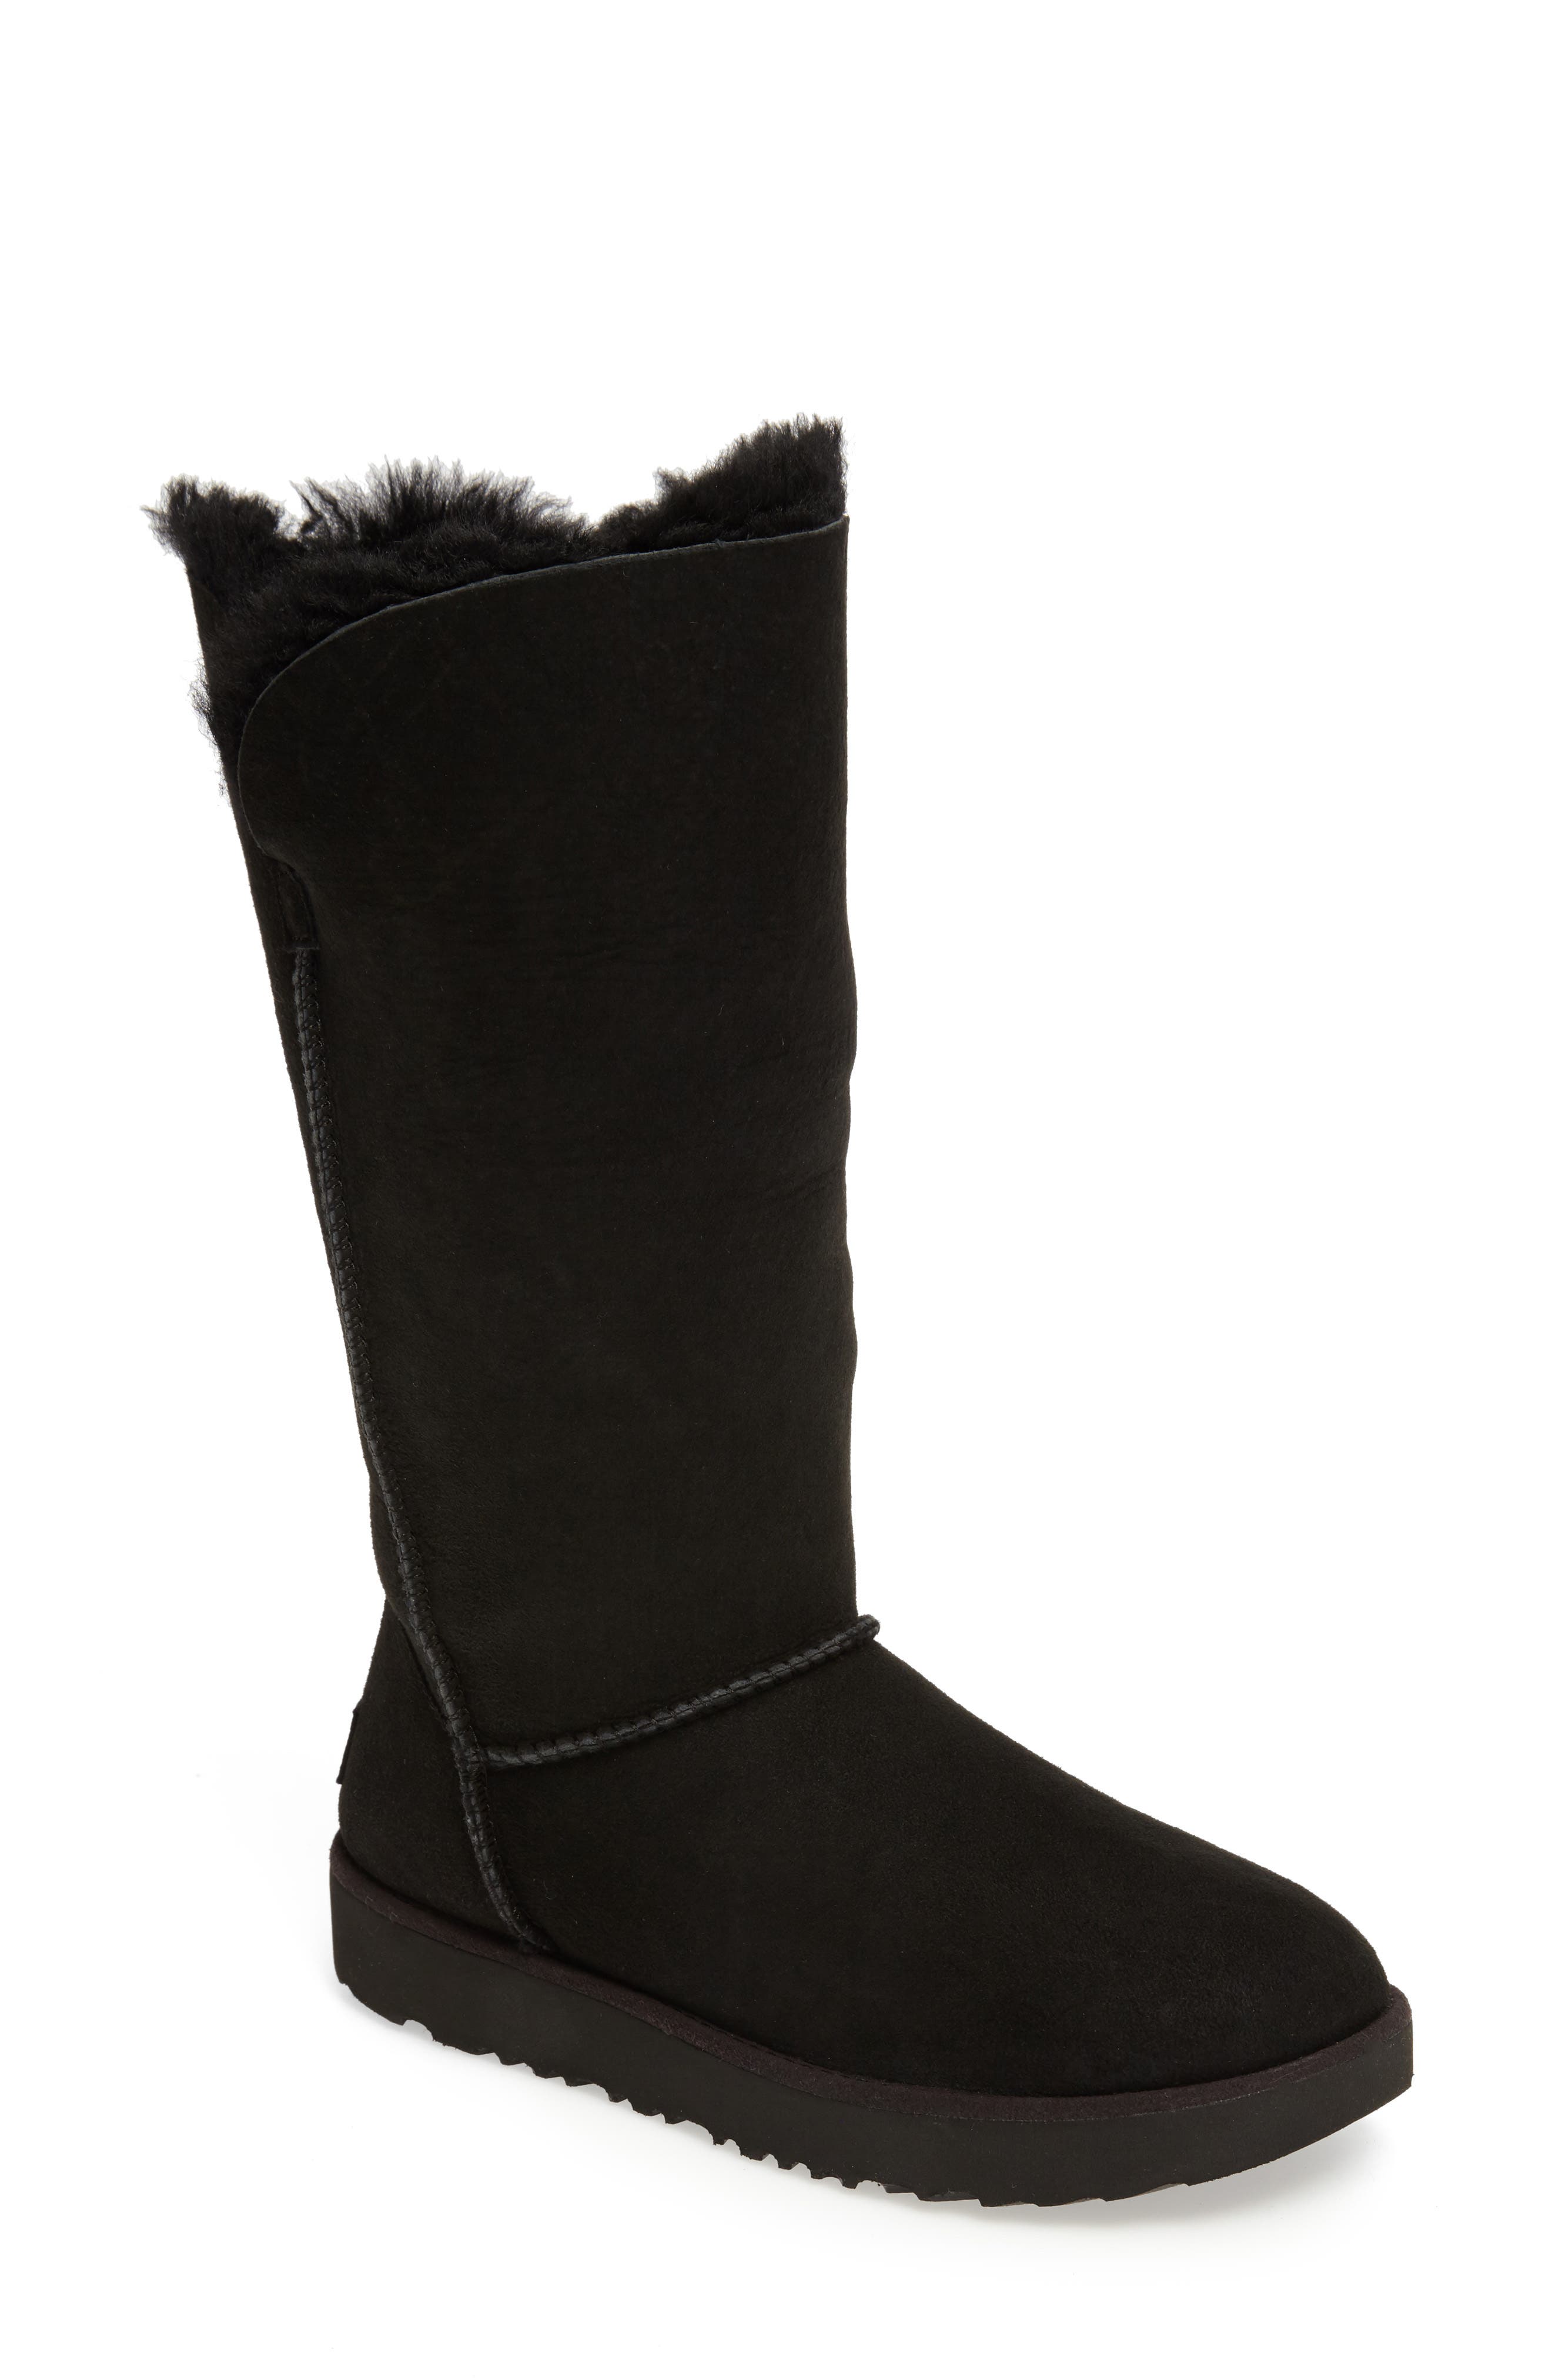 ugg women's classic cuff tall winter boot